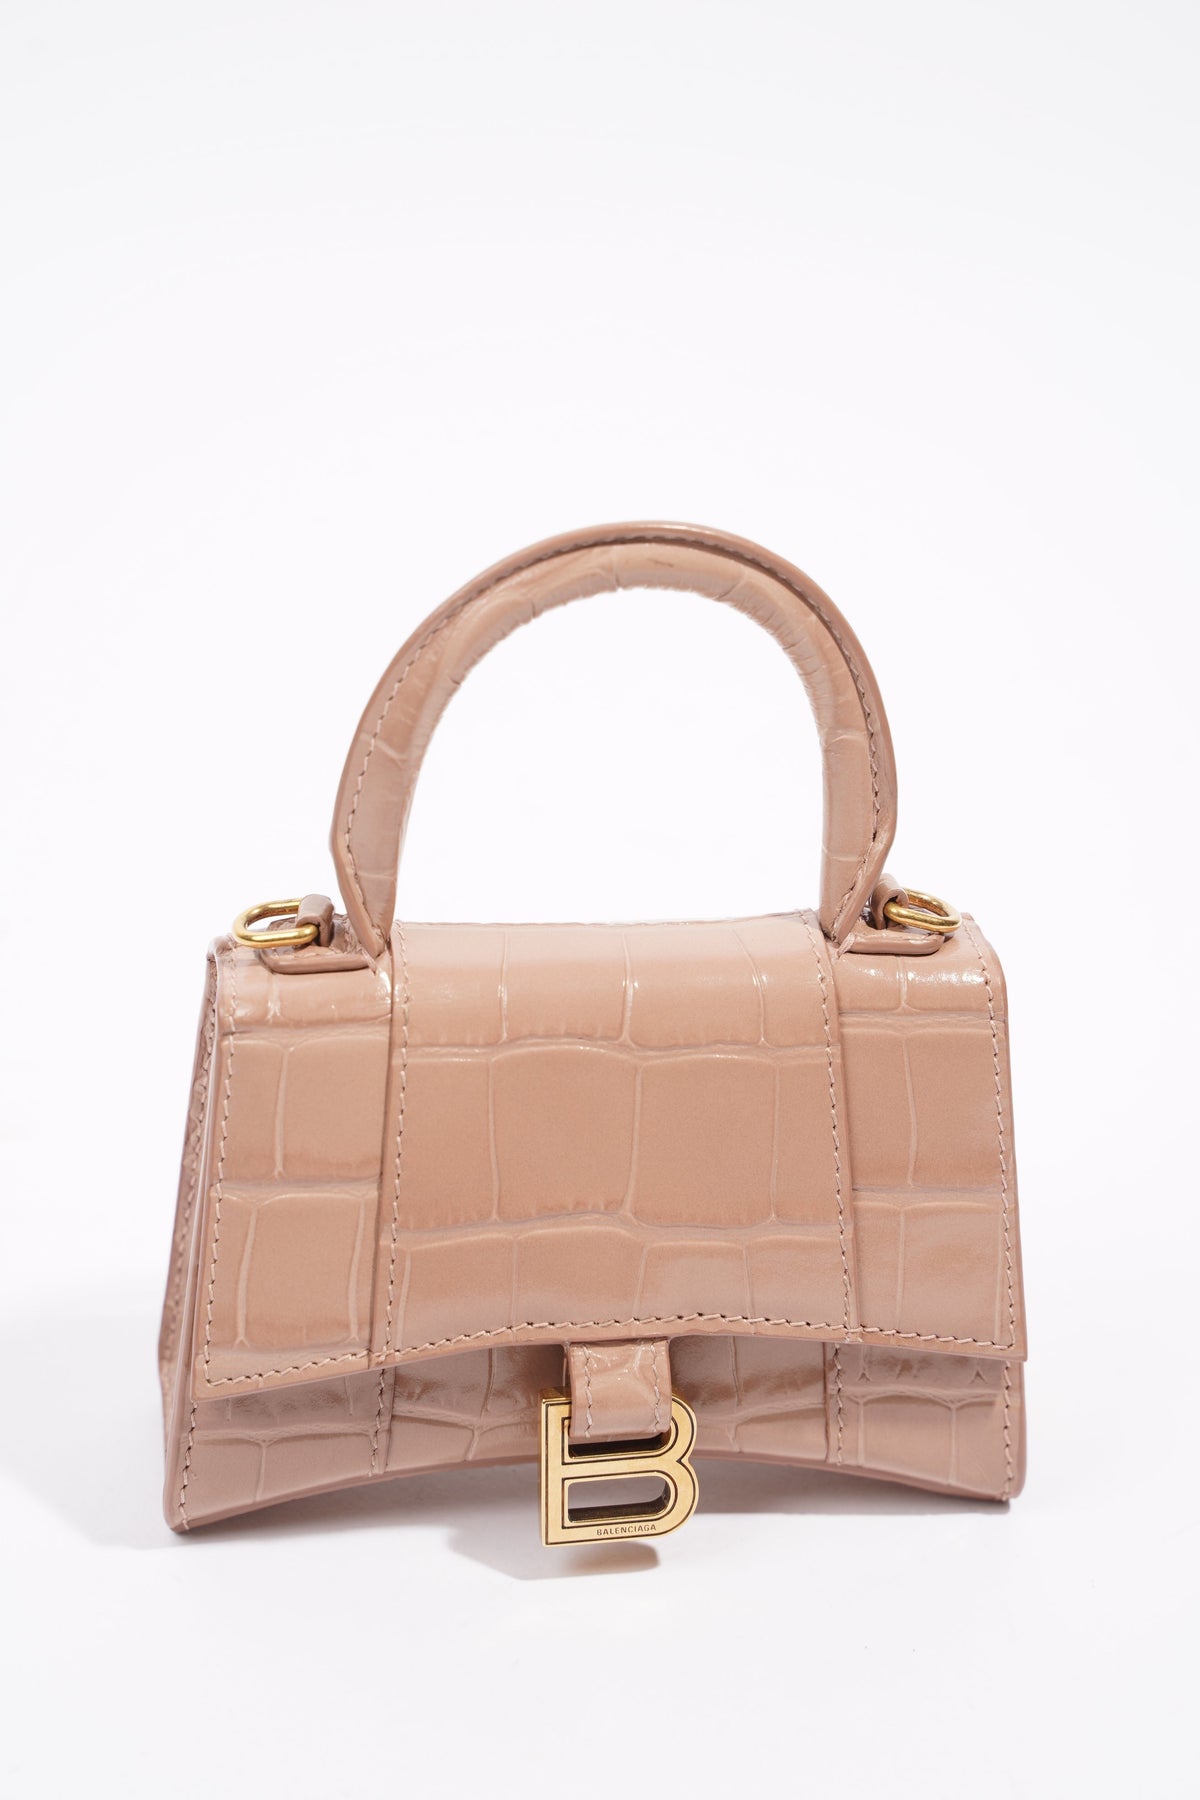 Balenciaga Hourglass Small Top Handle Bag Rosa in Calfskin Leather